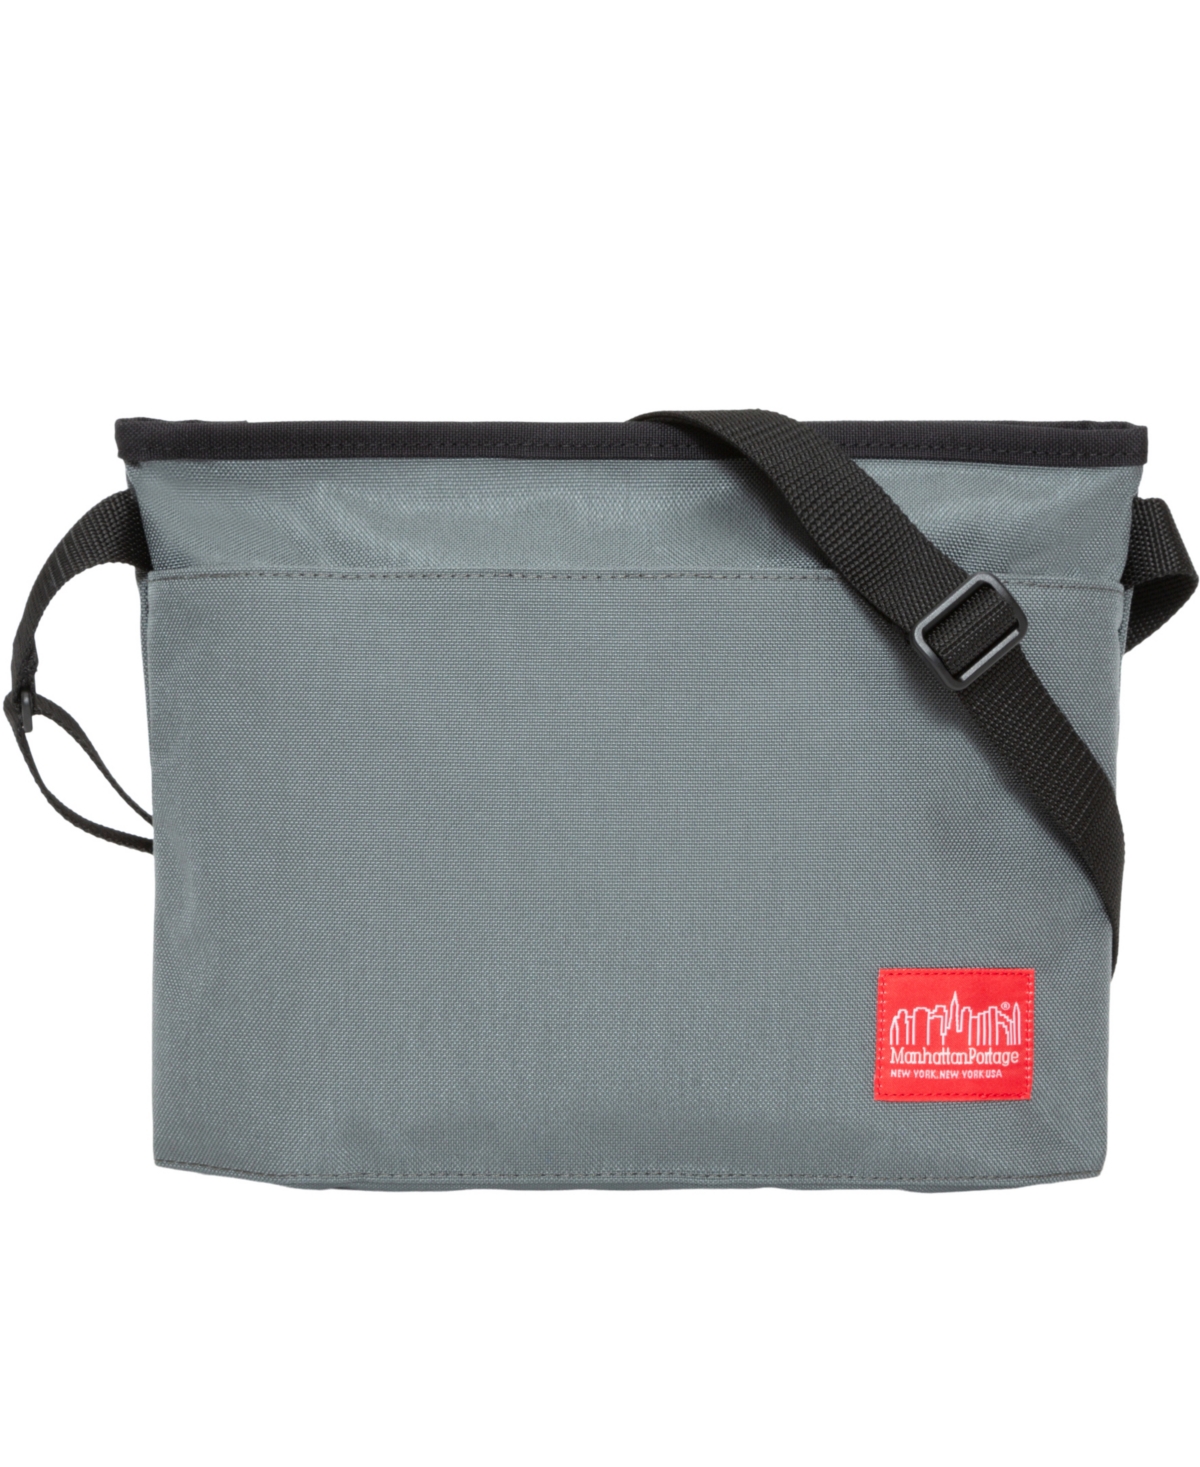 Ithaca Shoulder Bag - Gray